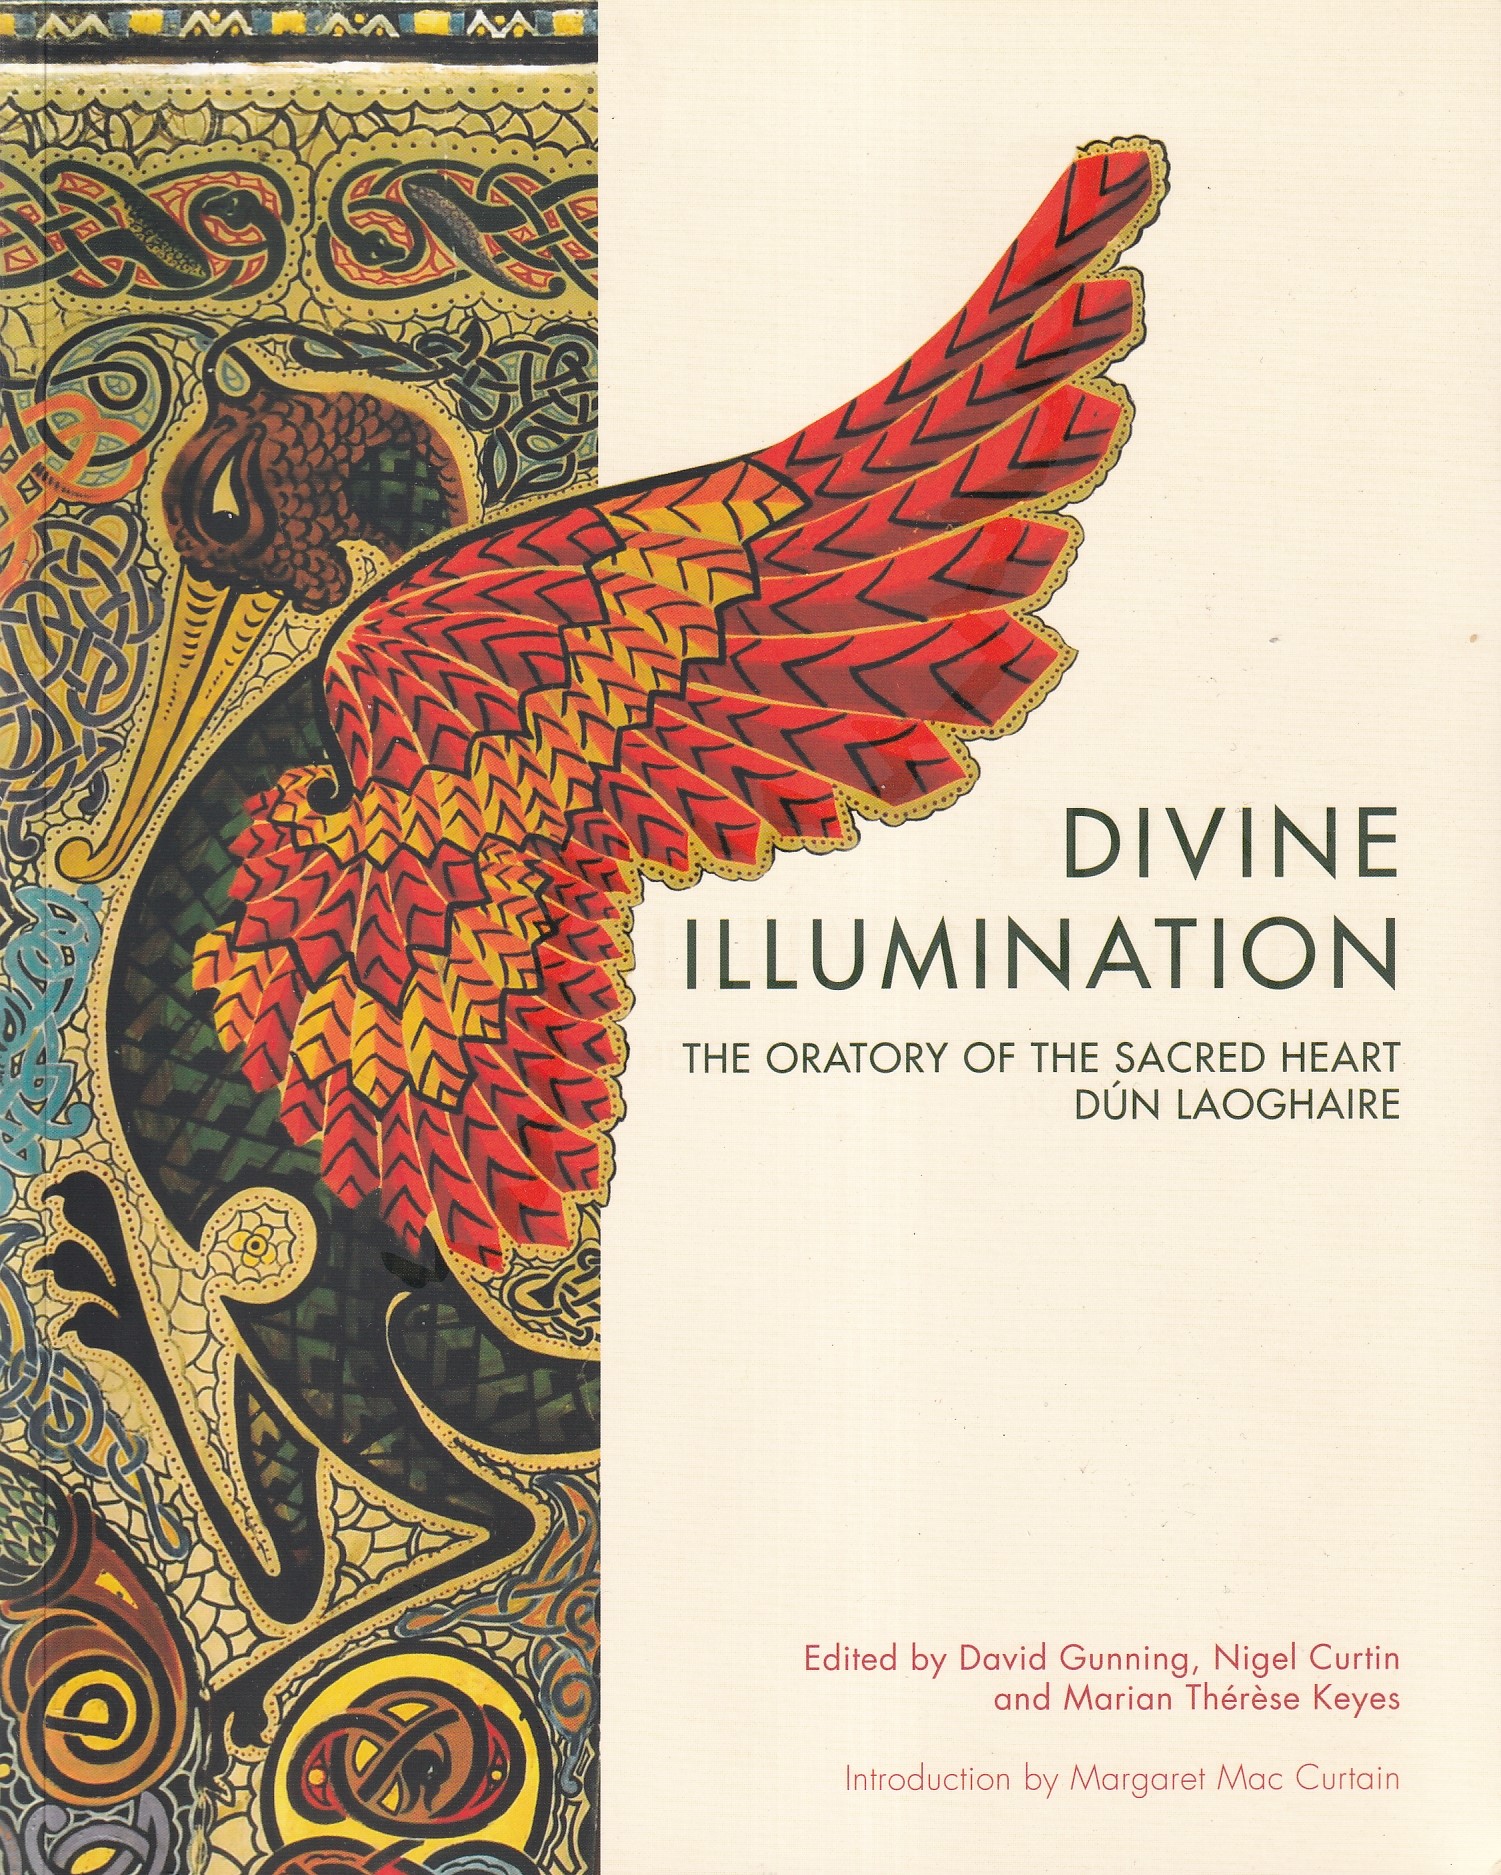 Divine Illumination: The Oratory of the Sacred Heart, Dún Laoghaire | David Gunning, Nigel Curtin, Marian Thérèse Keyes (eds.) | Charlie Byrne's